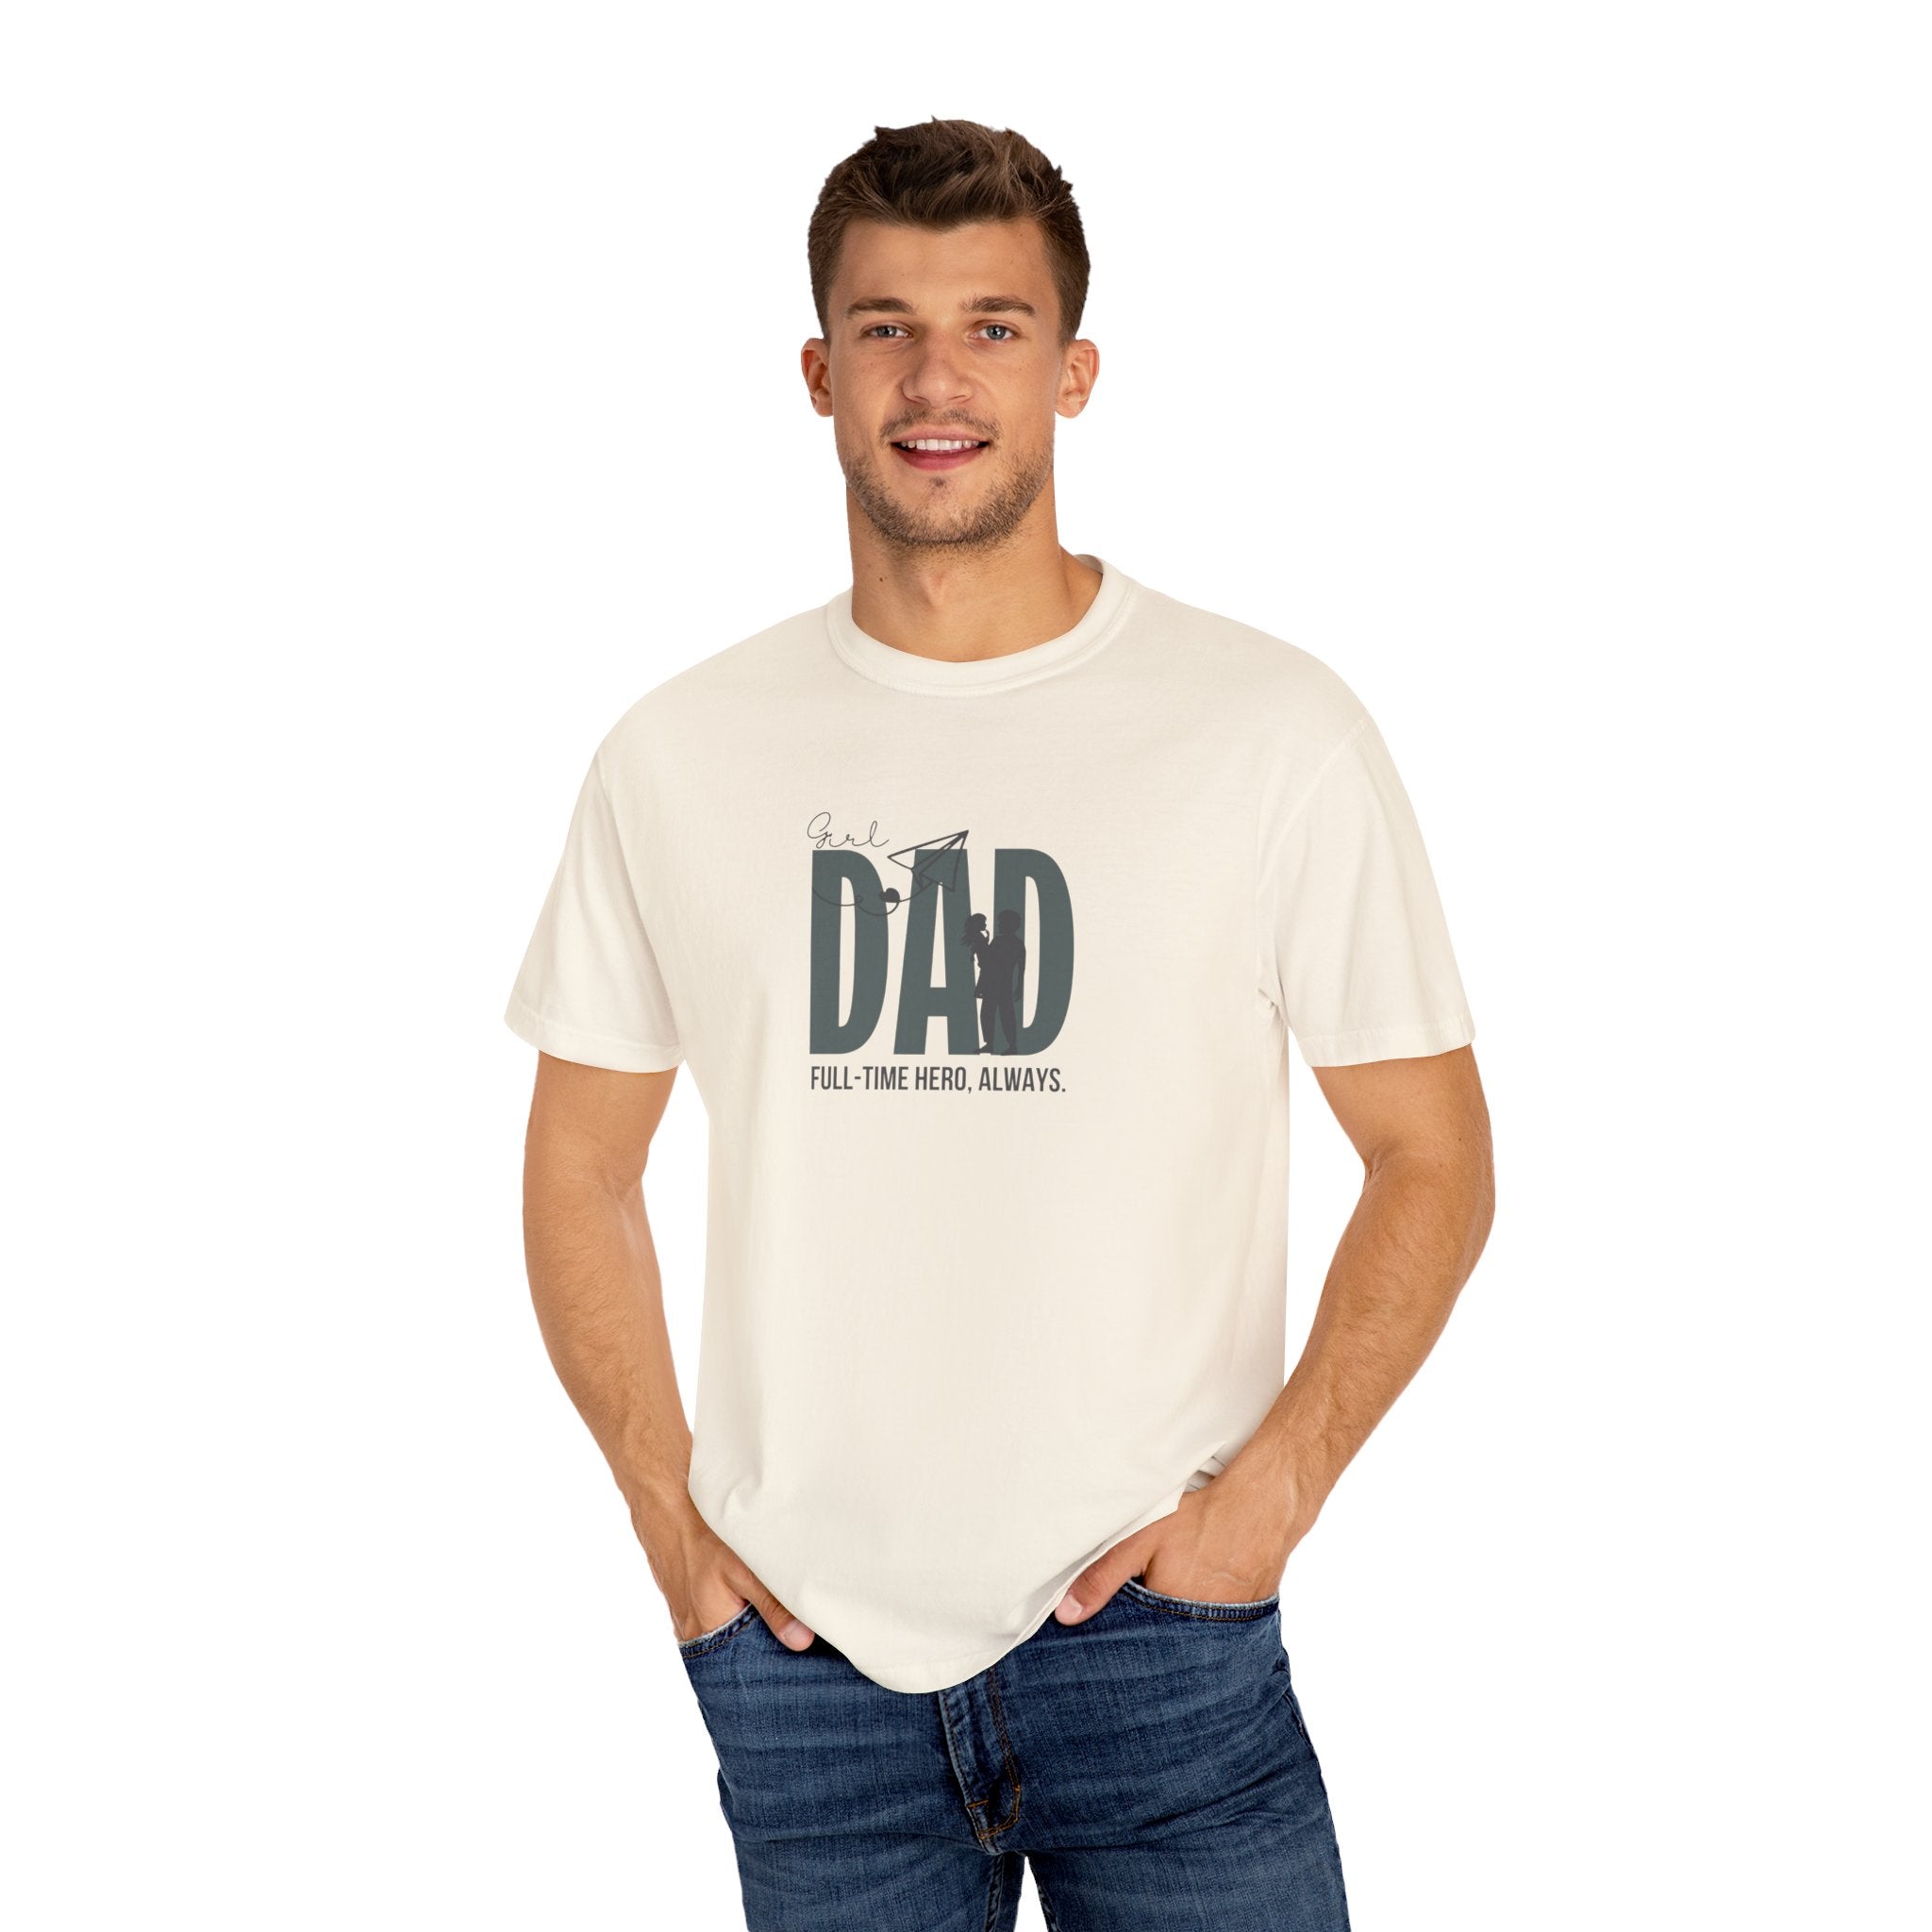 Girl Dad: Full Time Hero, Always T-Shirt